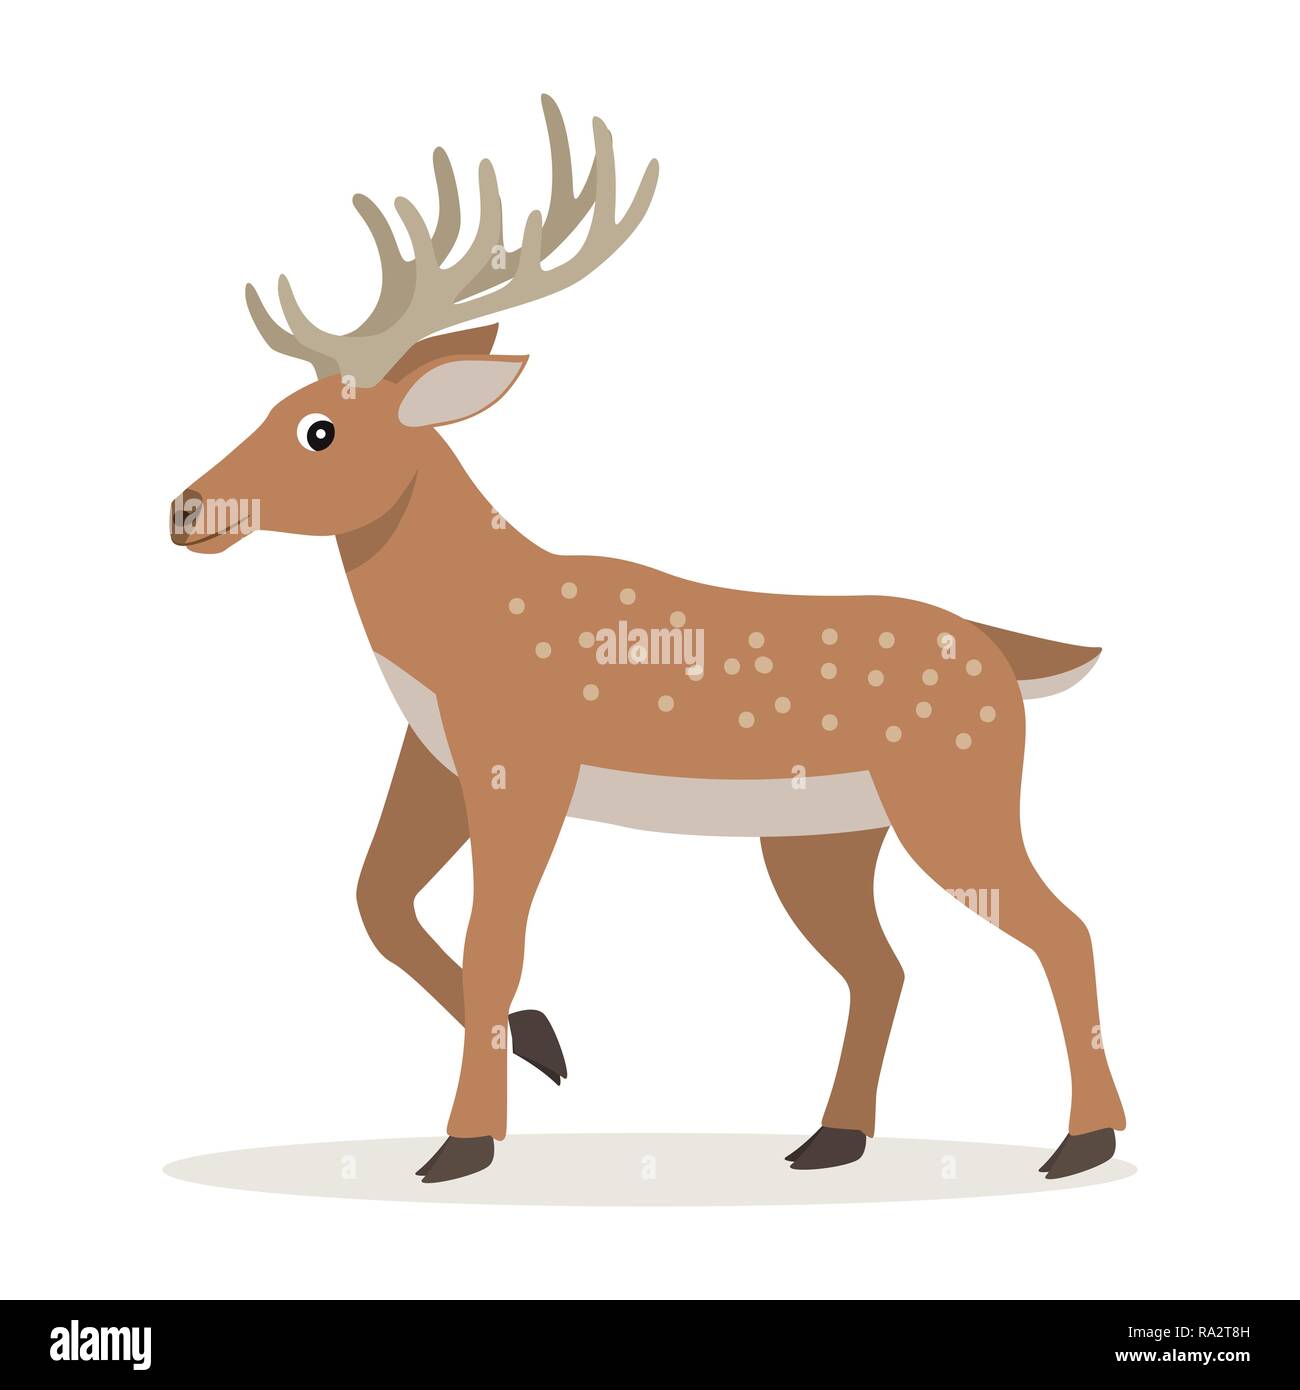 Cute forest animal, cartoon deer with long horns Stock Vector